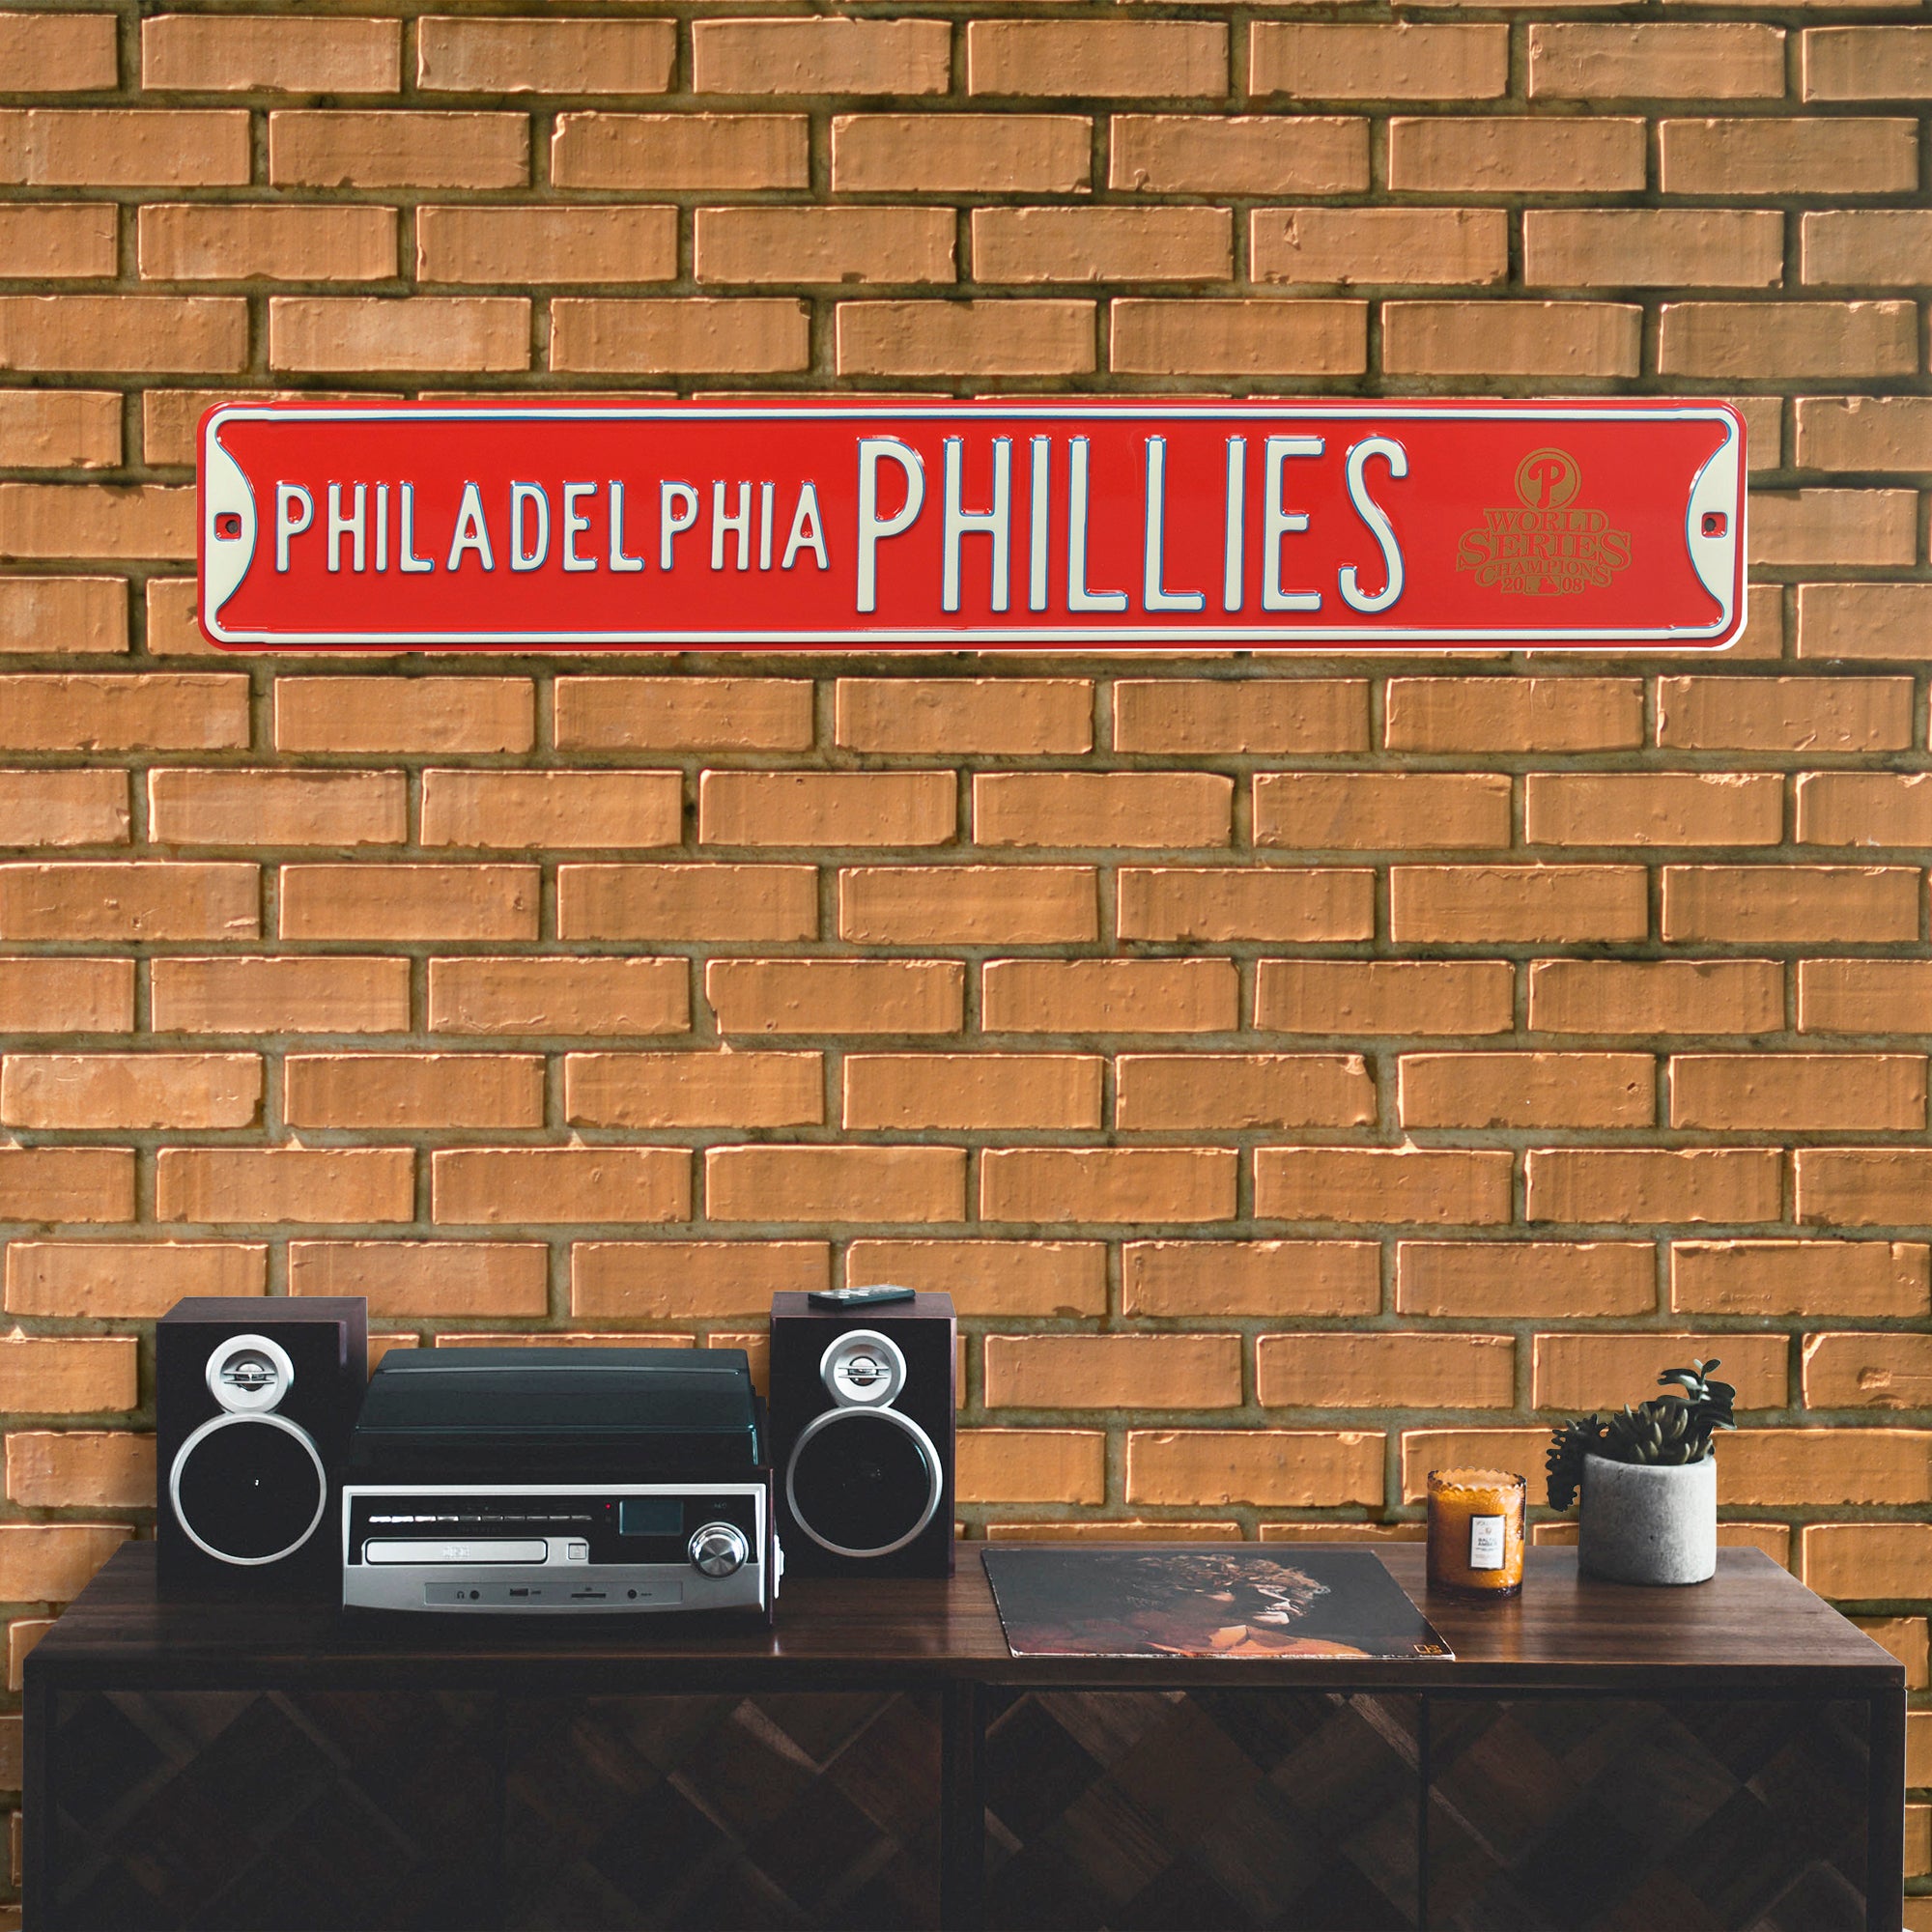 Philadelphia Phillies Steel Street Sign with Logo-PHILADELPHIA PHILLIES WS 2008 36" W x 6" H by Fathead